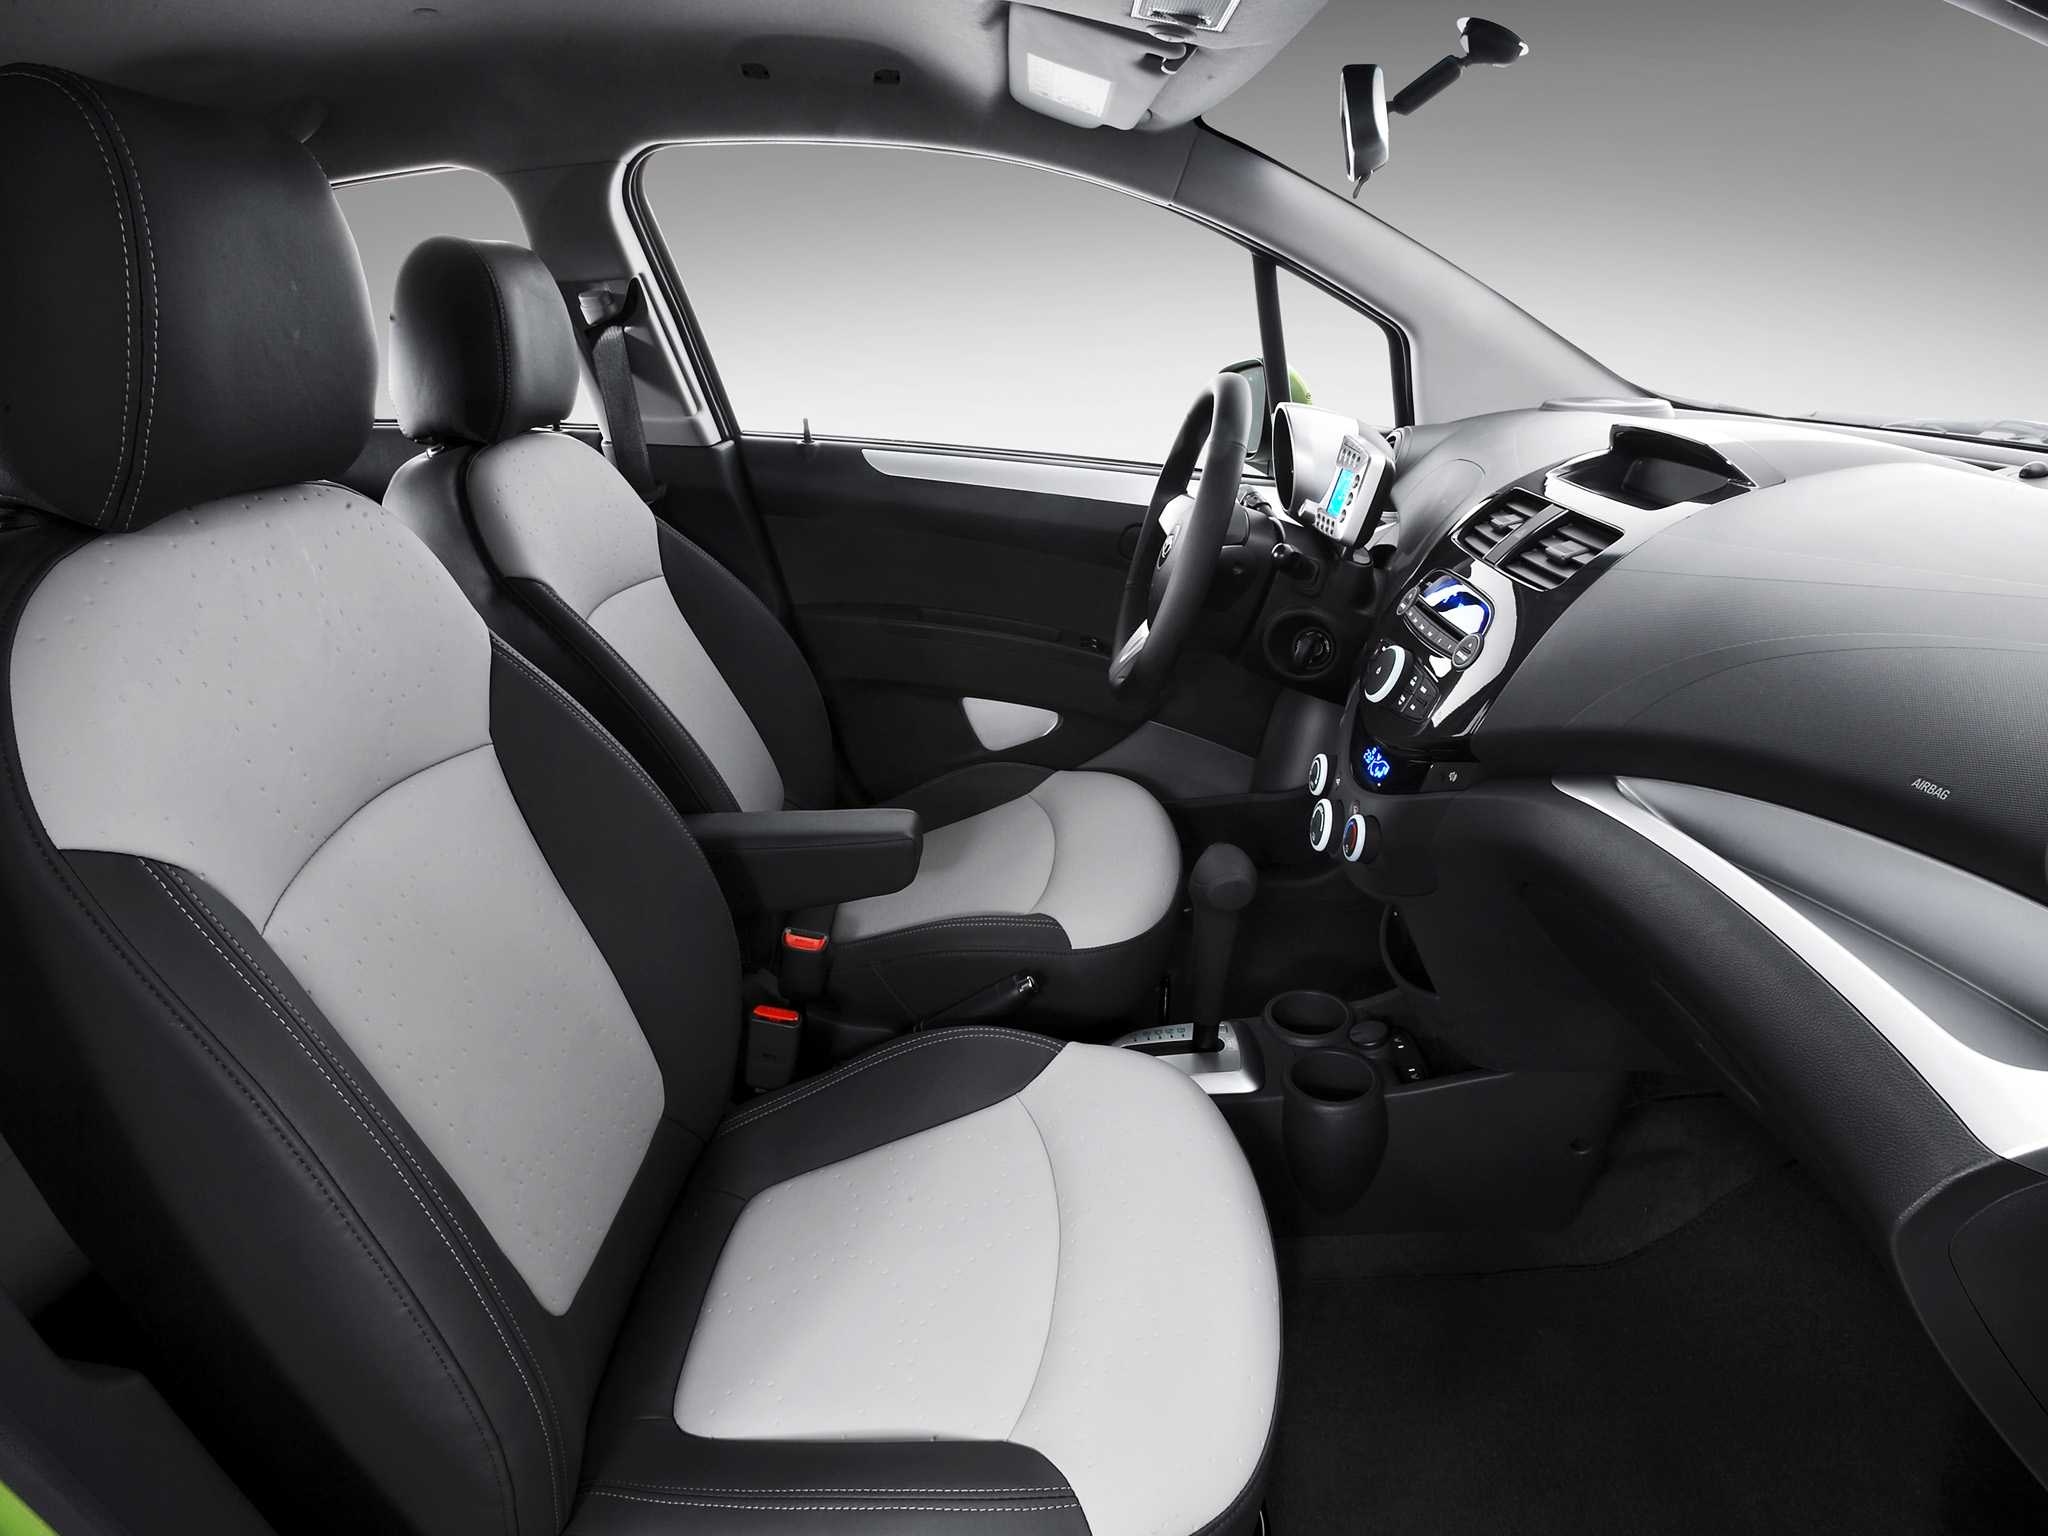 Daewoo Matiz interior - Seats